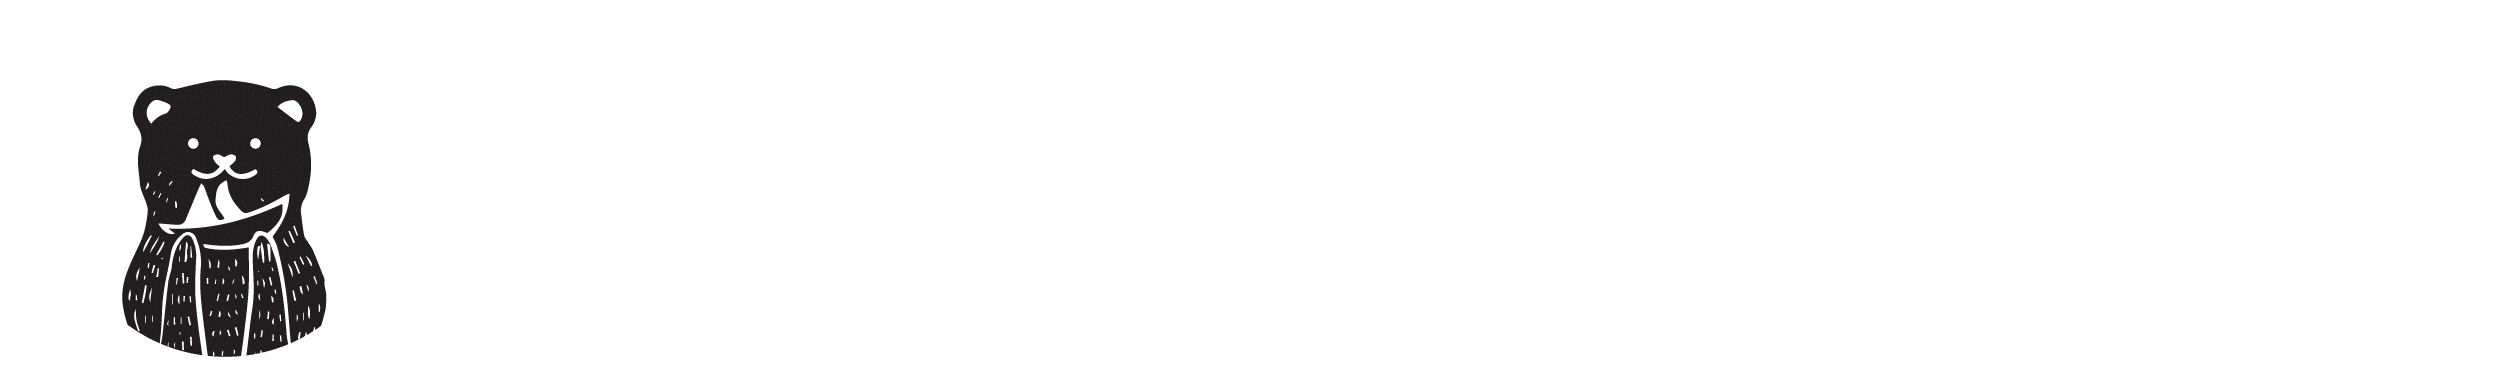 unhotel global logo